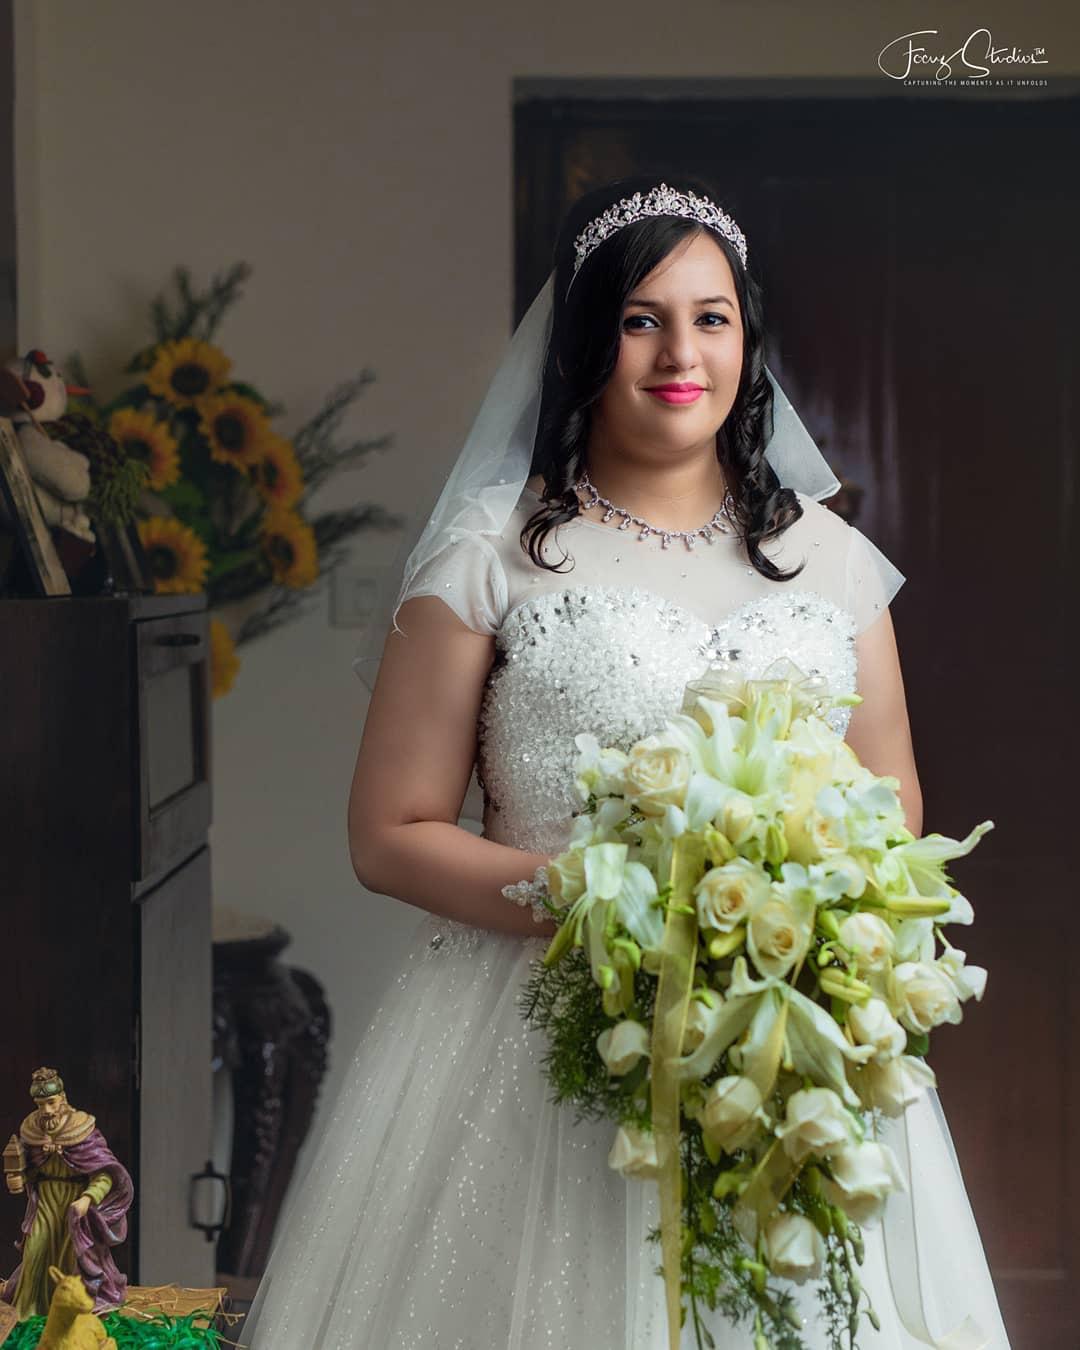 Christian Marriage Dress For Bride | safewindows.co.uk